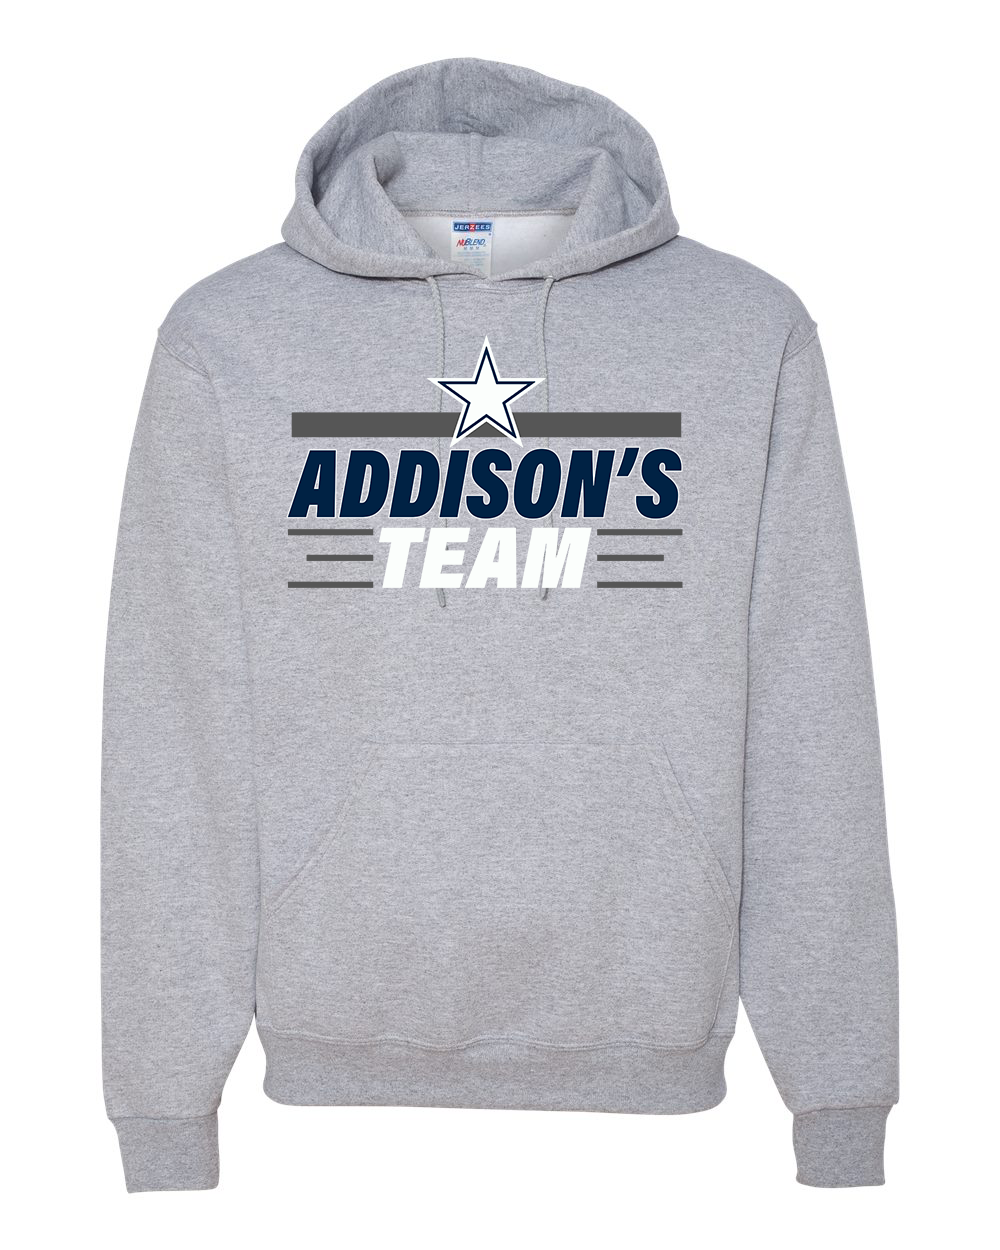 Addison's Team - Hooded Sweatshirt - YOUTH – Addison Cowboys Merch